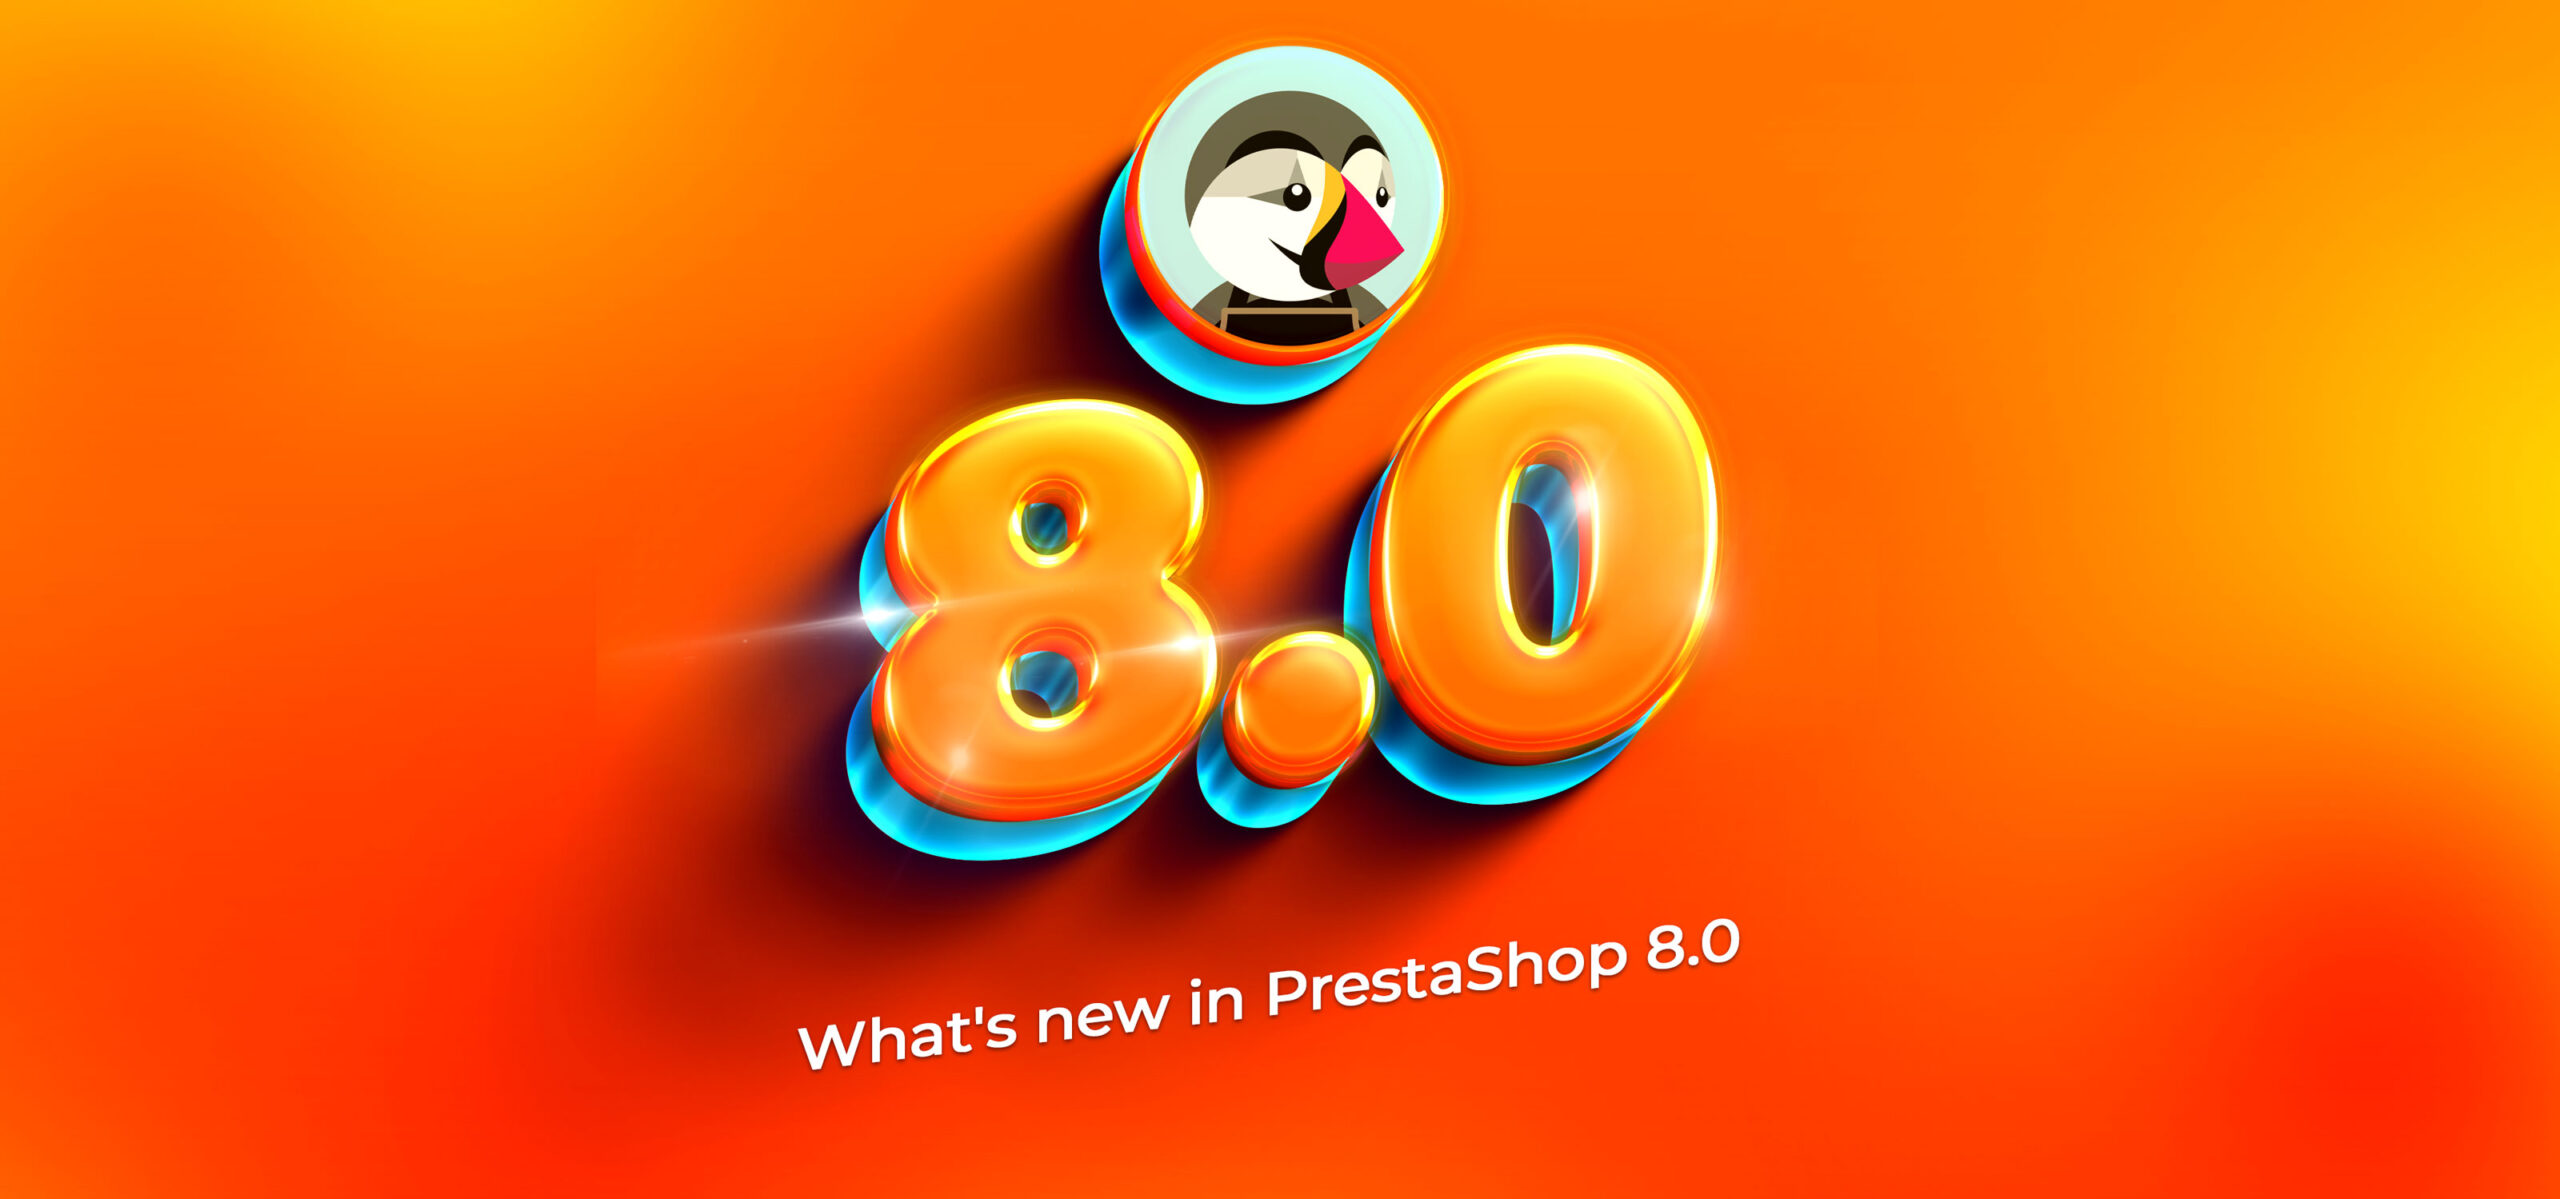 Prestashop 8.0 new update changes and new features of version 8 of PrestaShop